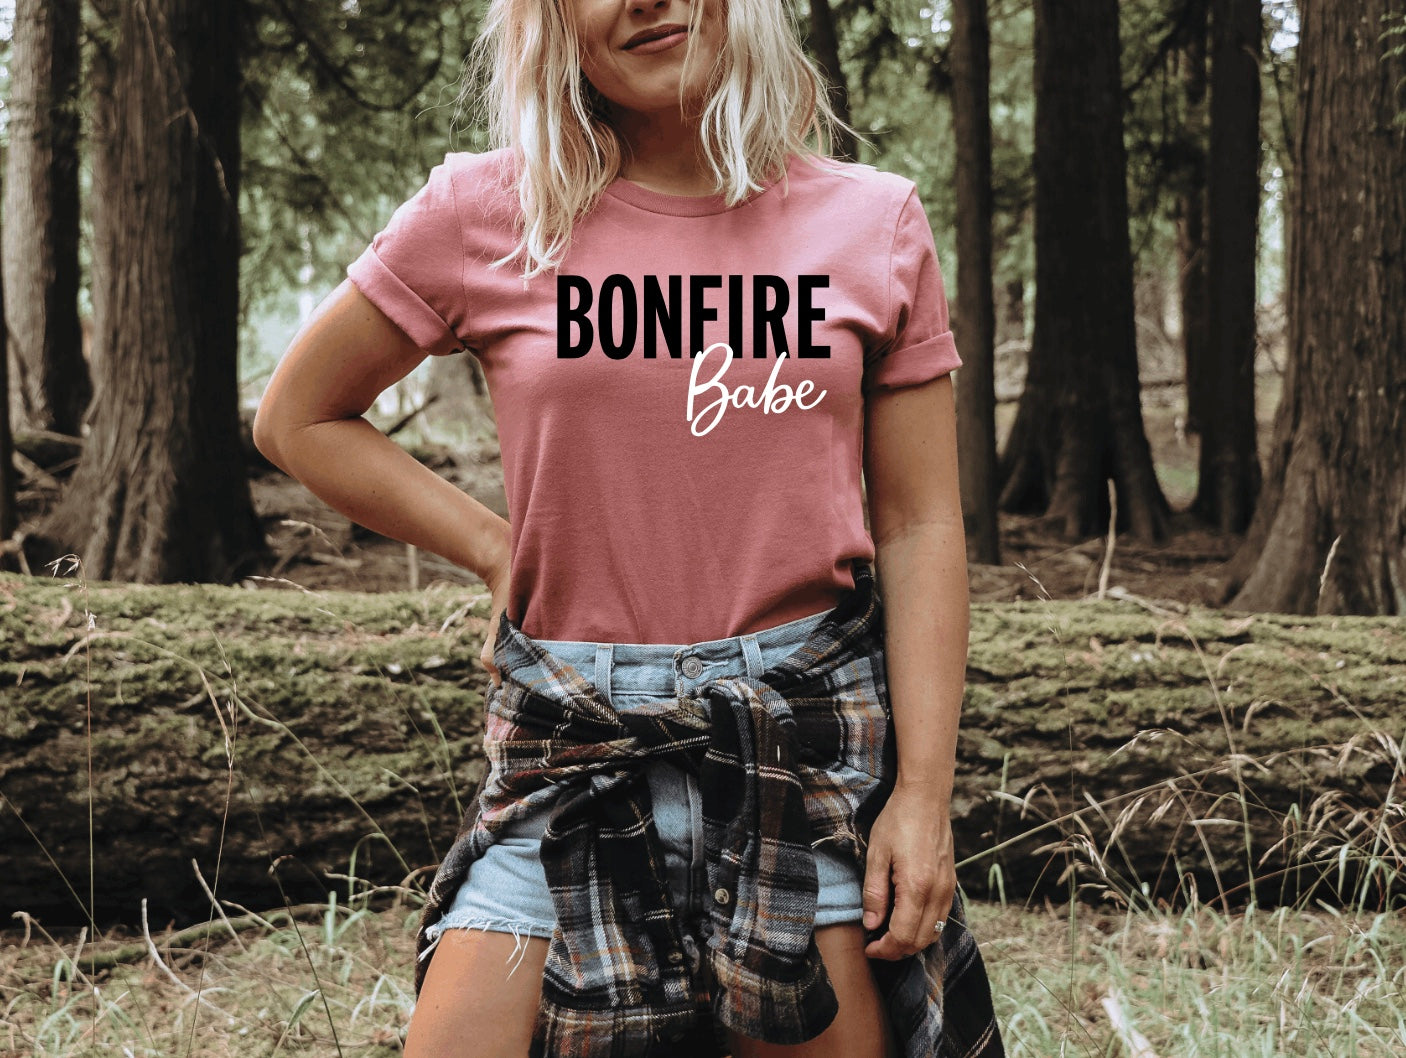 Bonfire babe t-shirt 